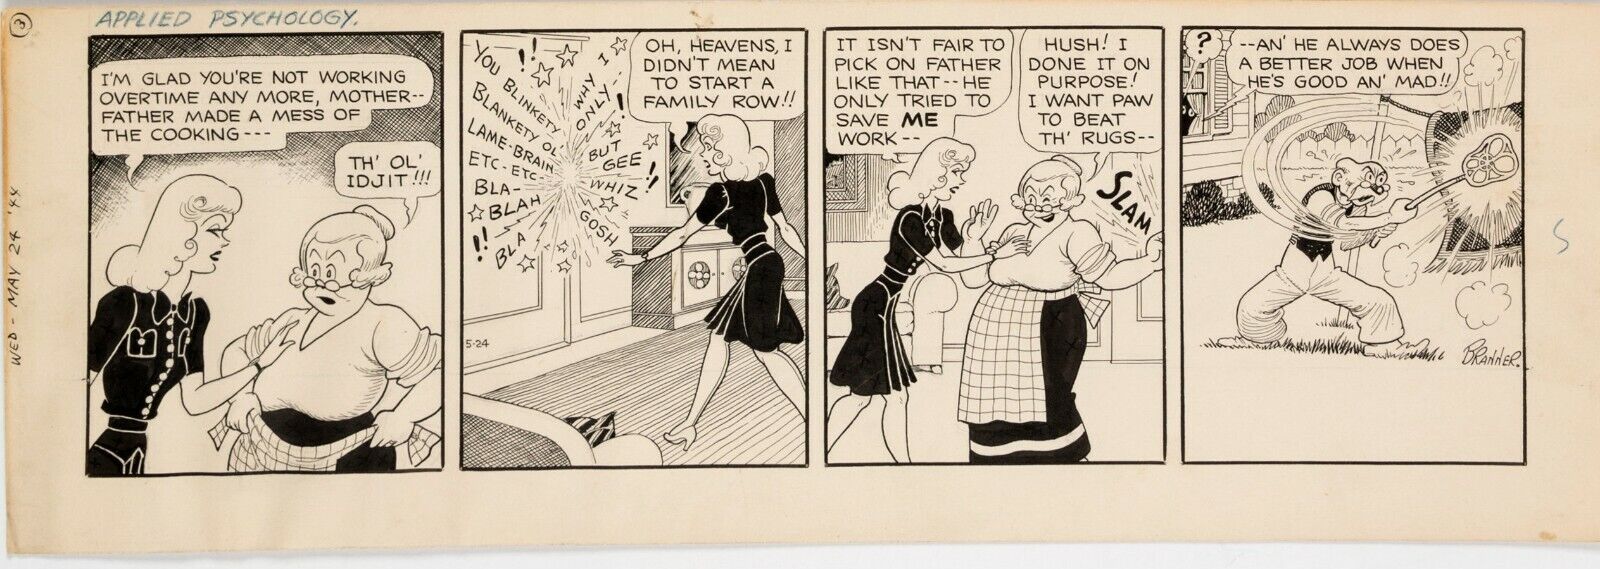 5-24-1944 Winnie Winkle Comic Strip Original Art by Martin Branner Oryginalna gwarancja, standard